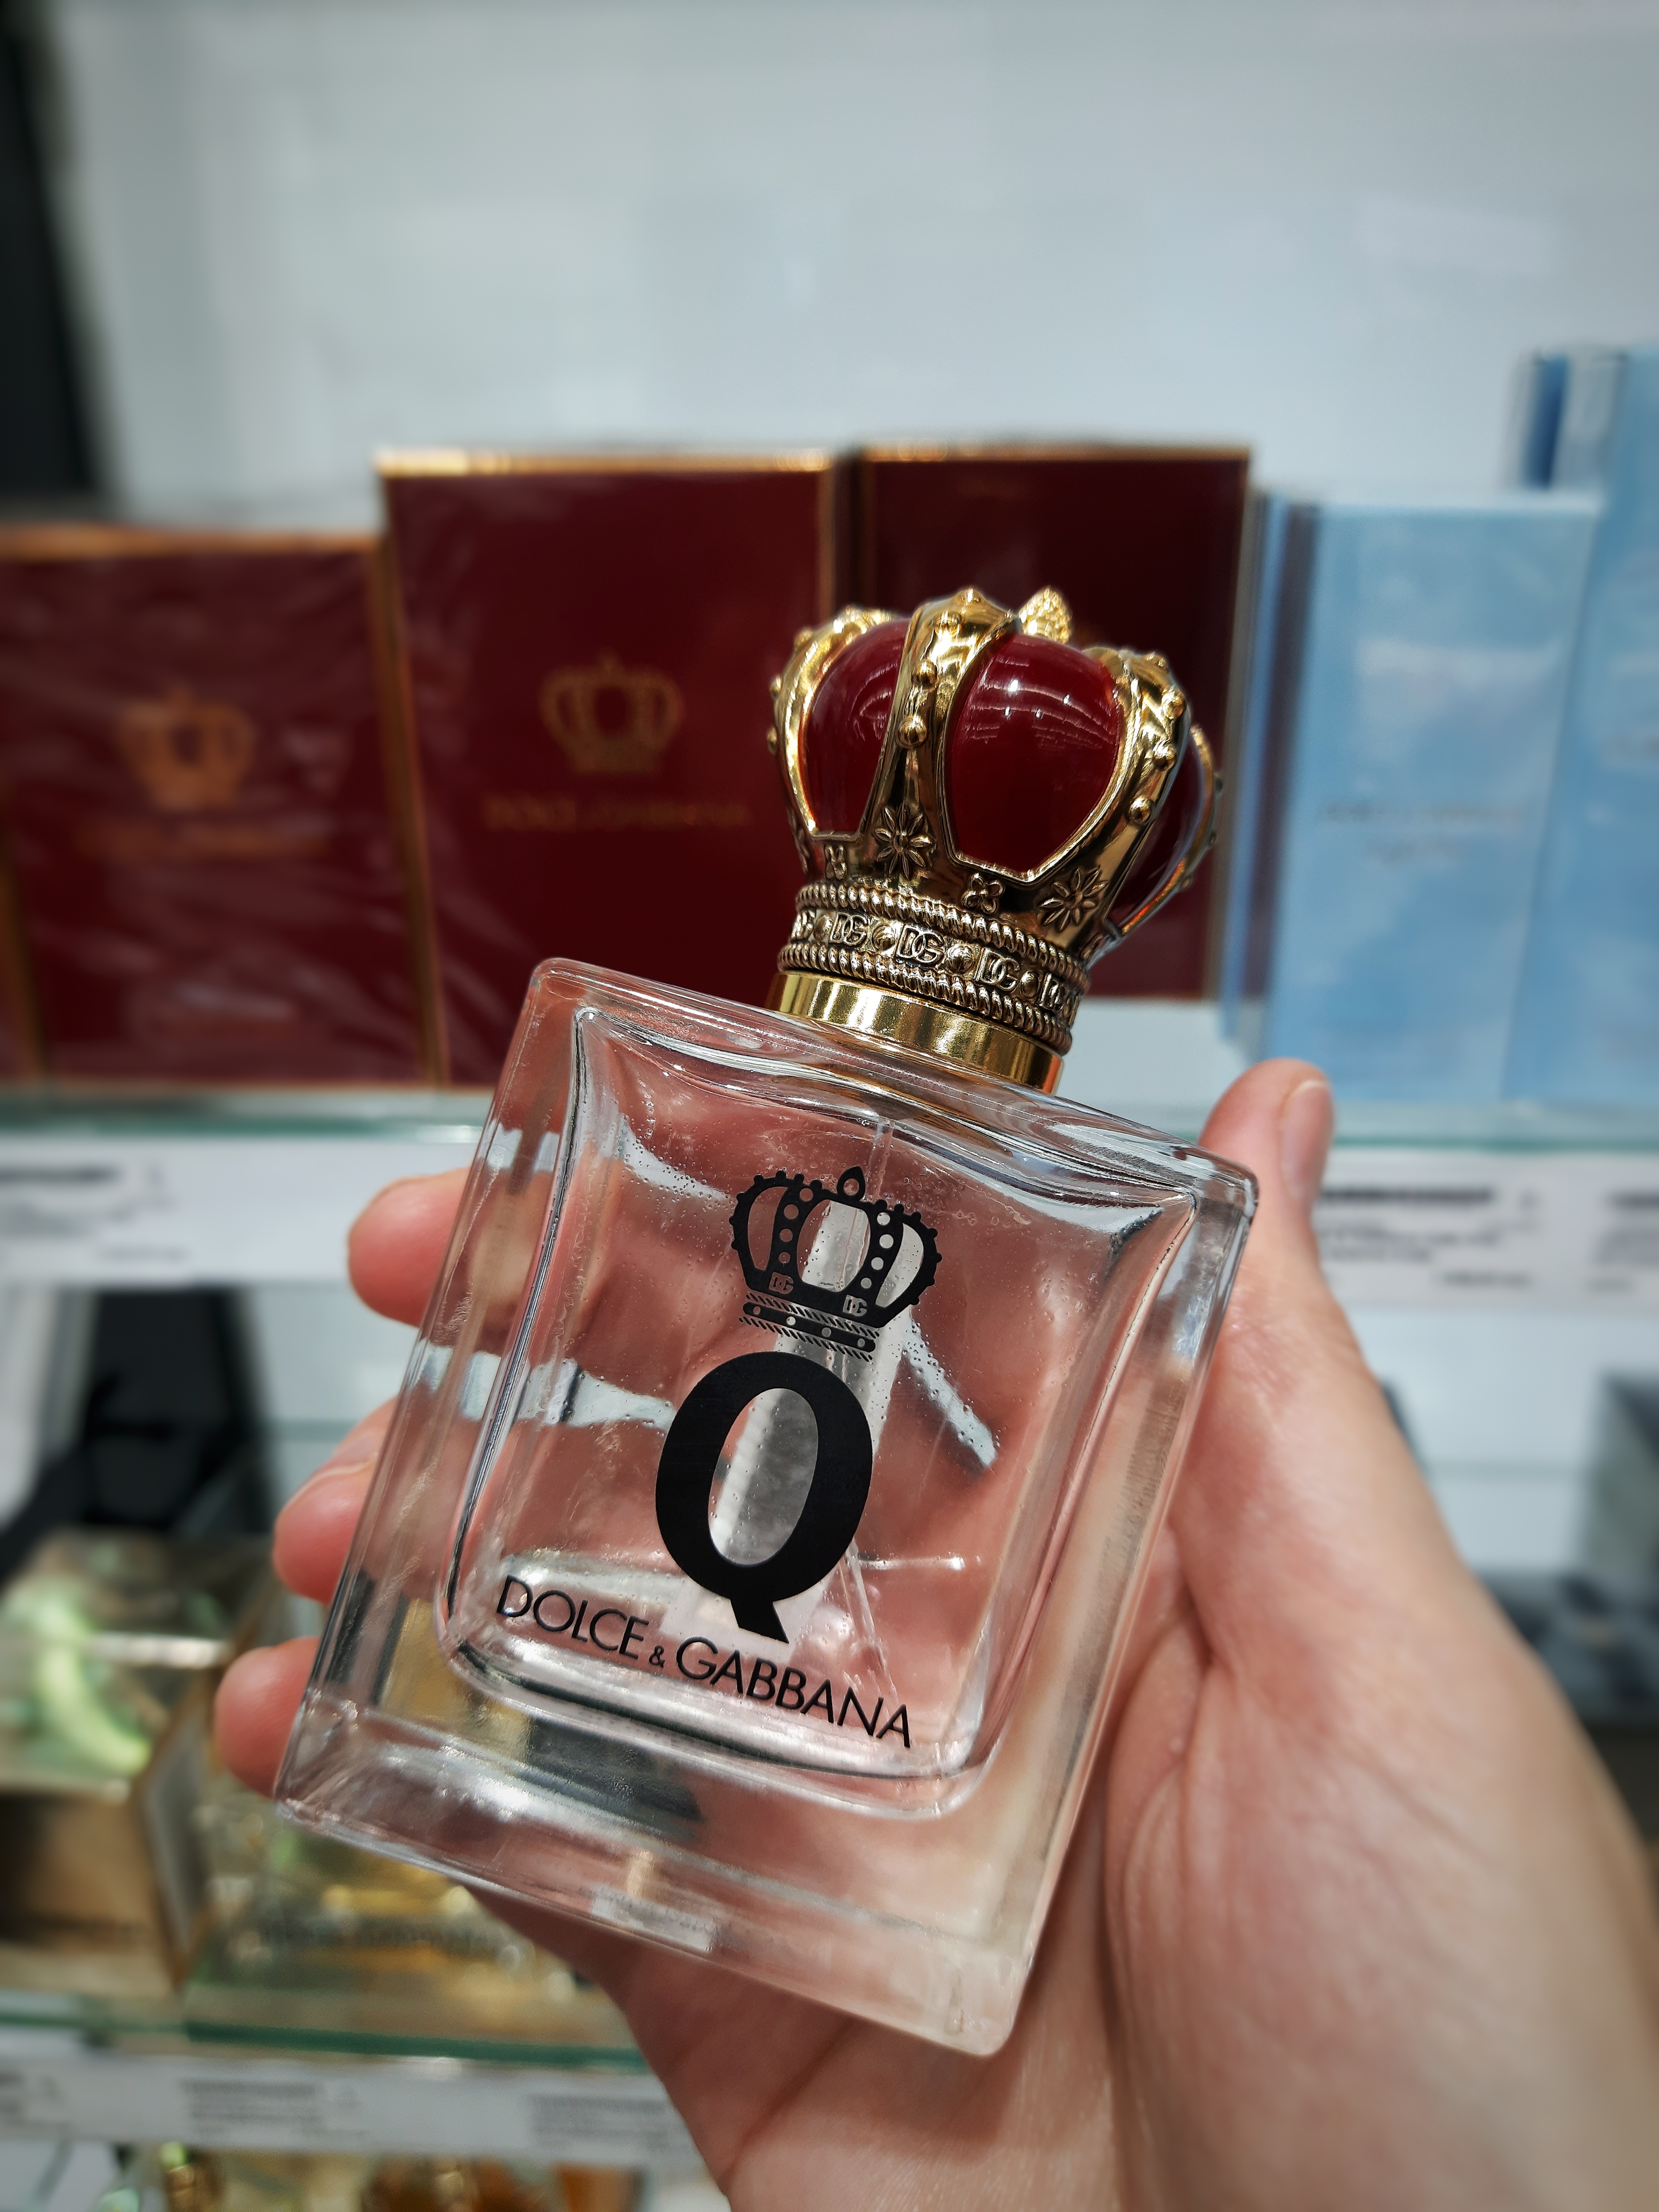 Q by Dolce & Gabbana - надягаємо парфумерну корону